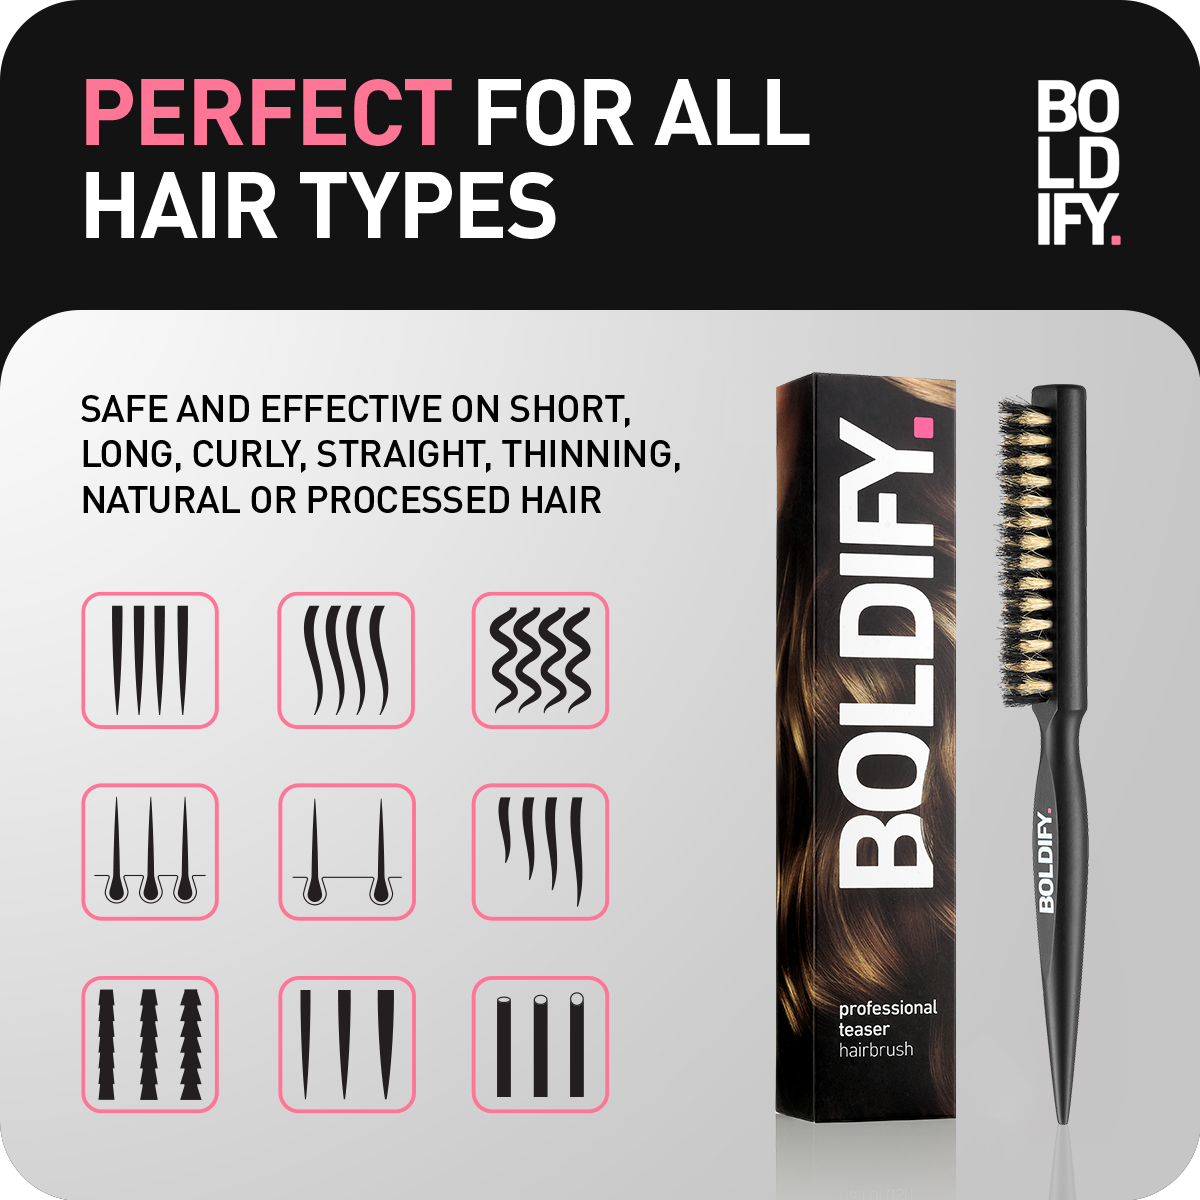 Professional Teaser Hairbrush by BOLDIFY INC.